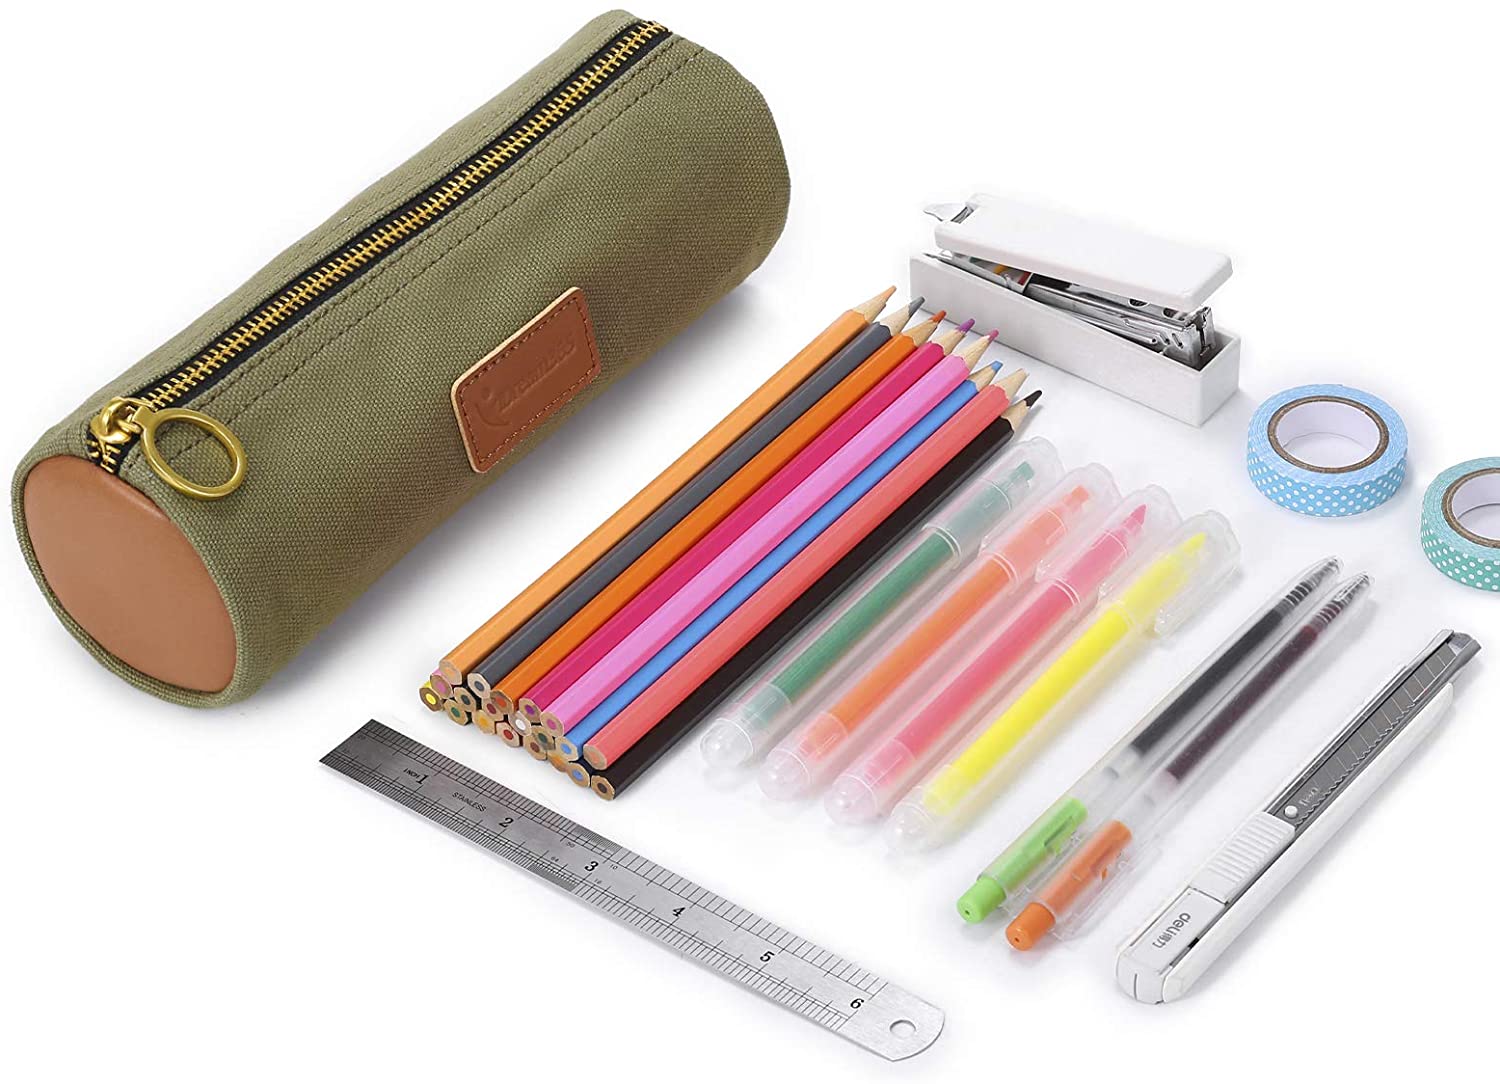  Canvas Simple Pencil Case Bag Pouch Durable with Brass Zipper Match Color Design-Green 